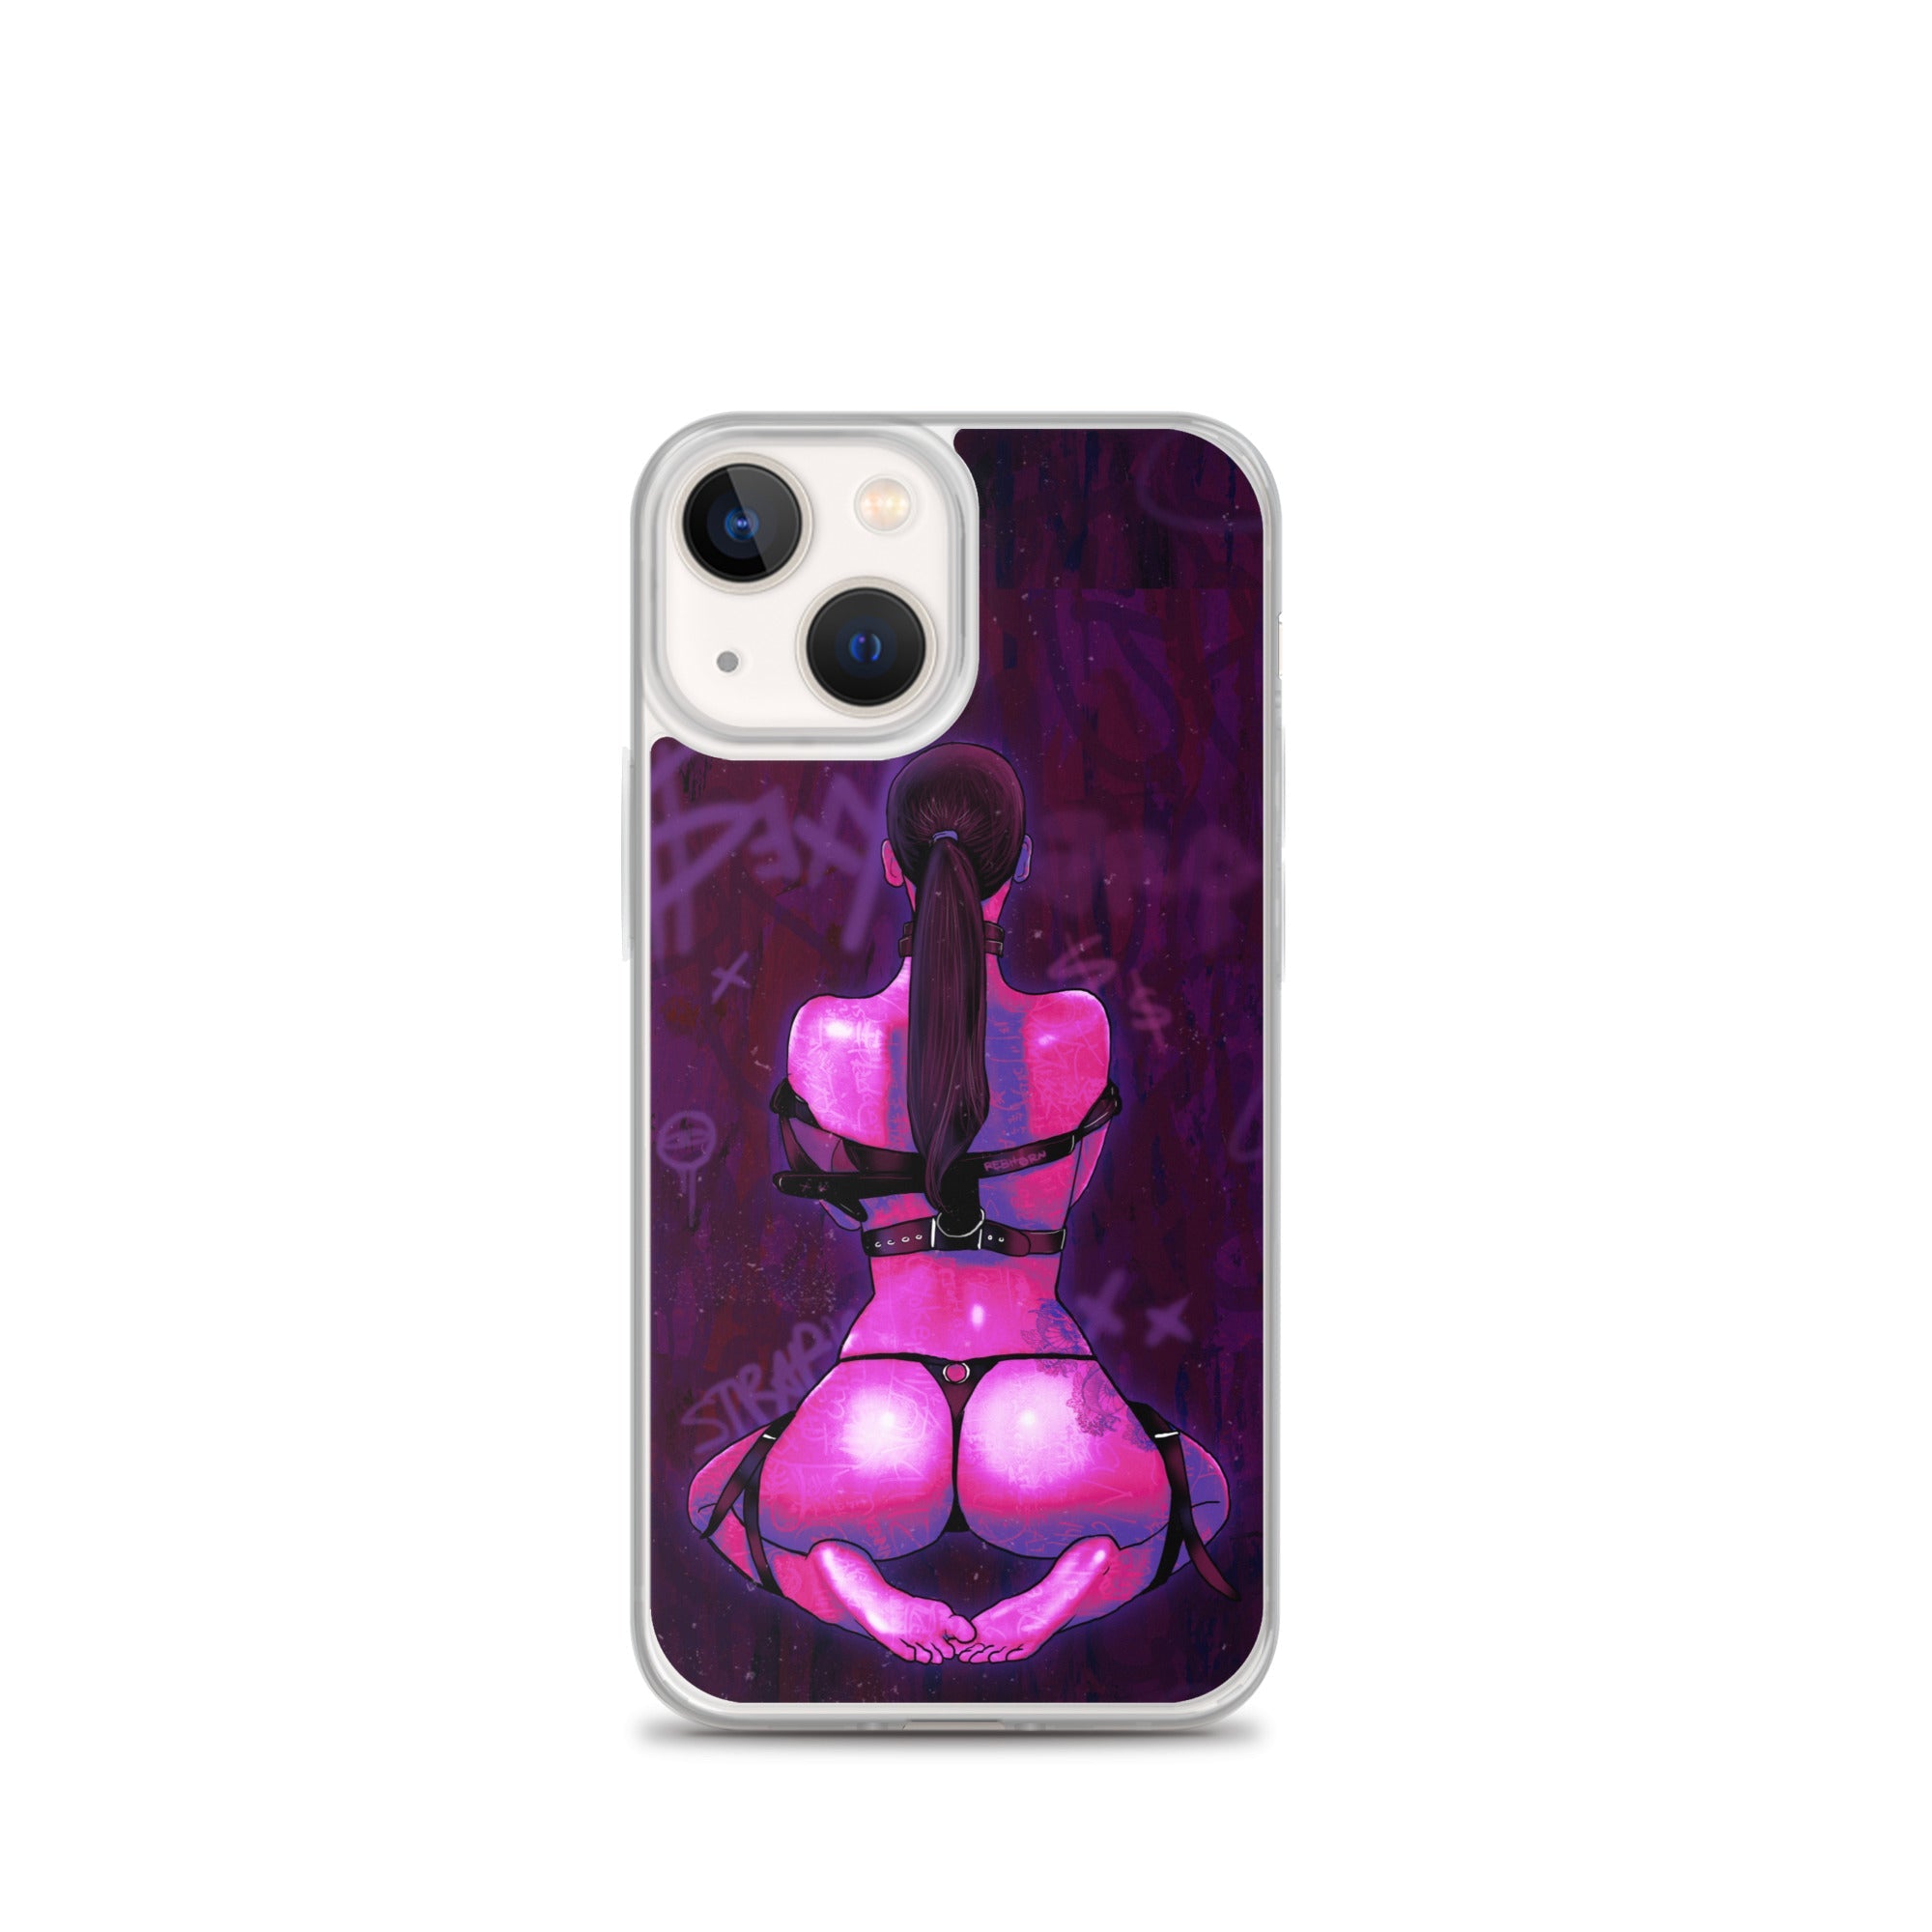 Strapped Sensual Purple iPhone Case - REBHORN DESIGN